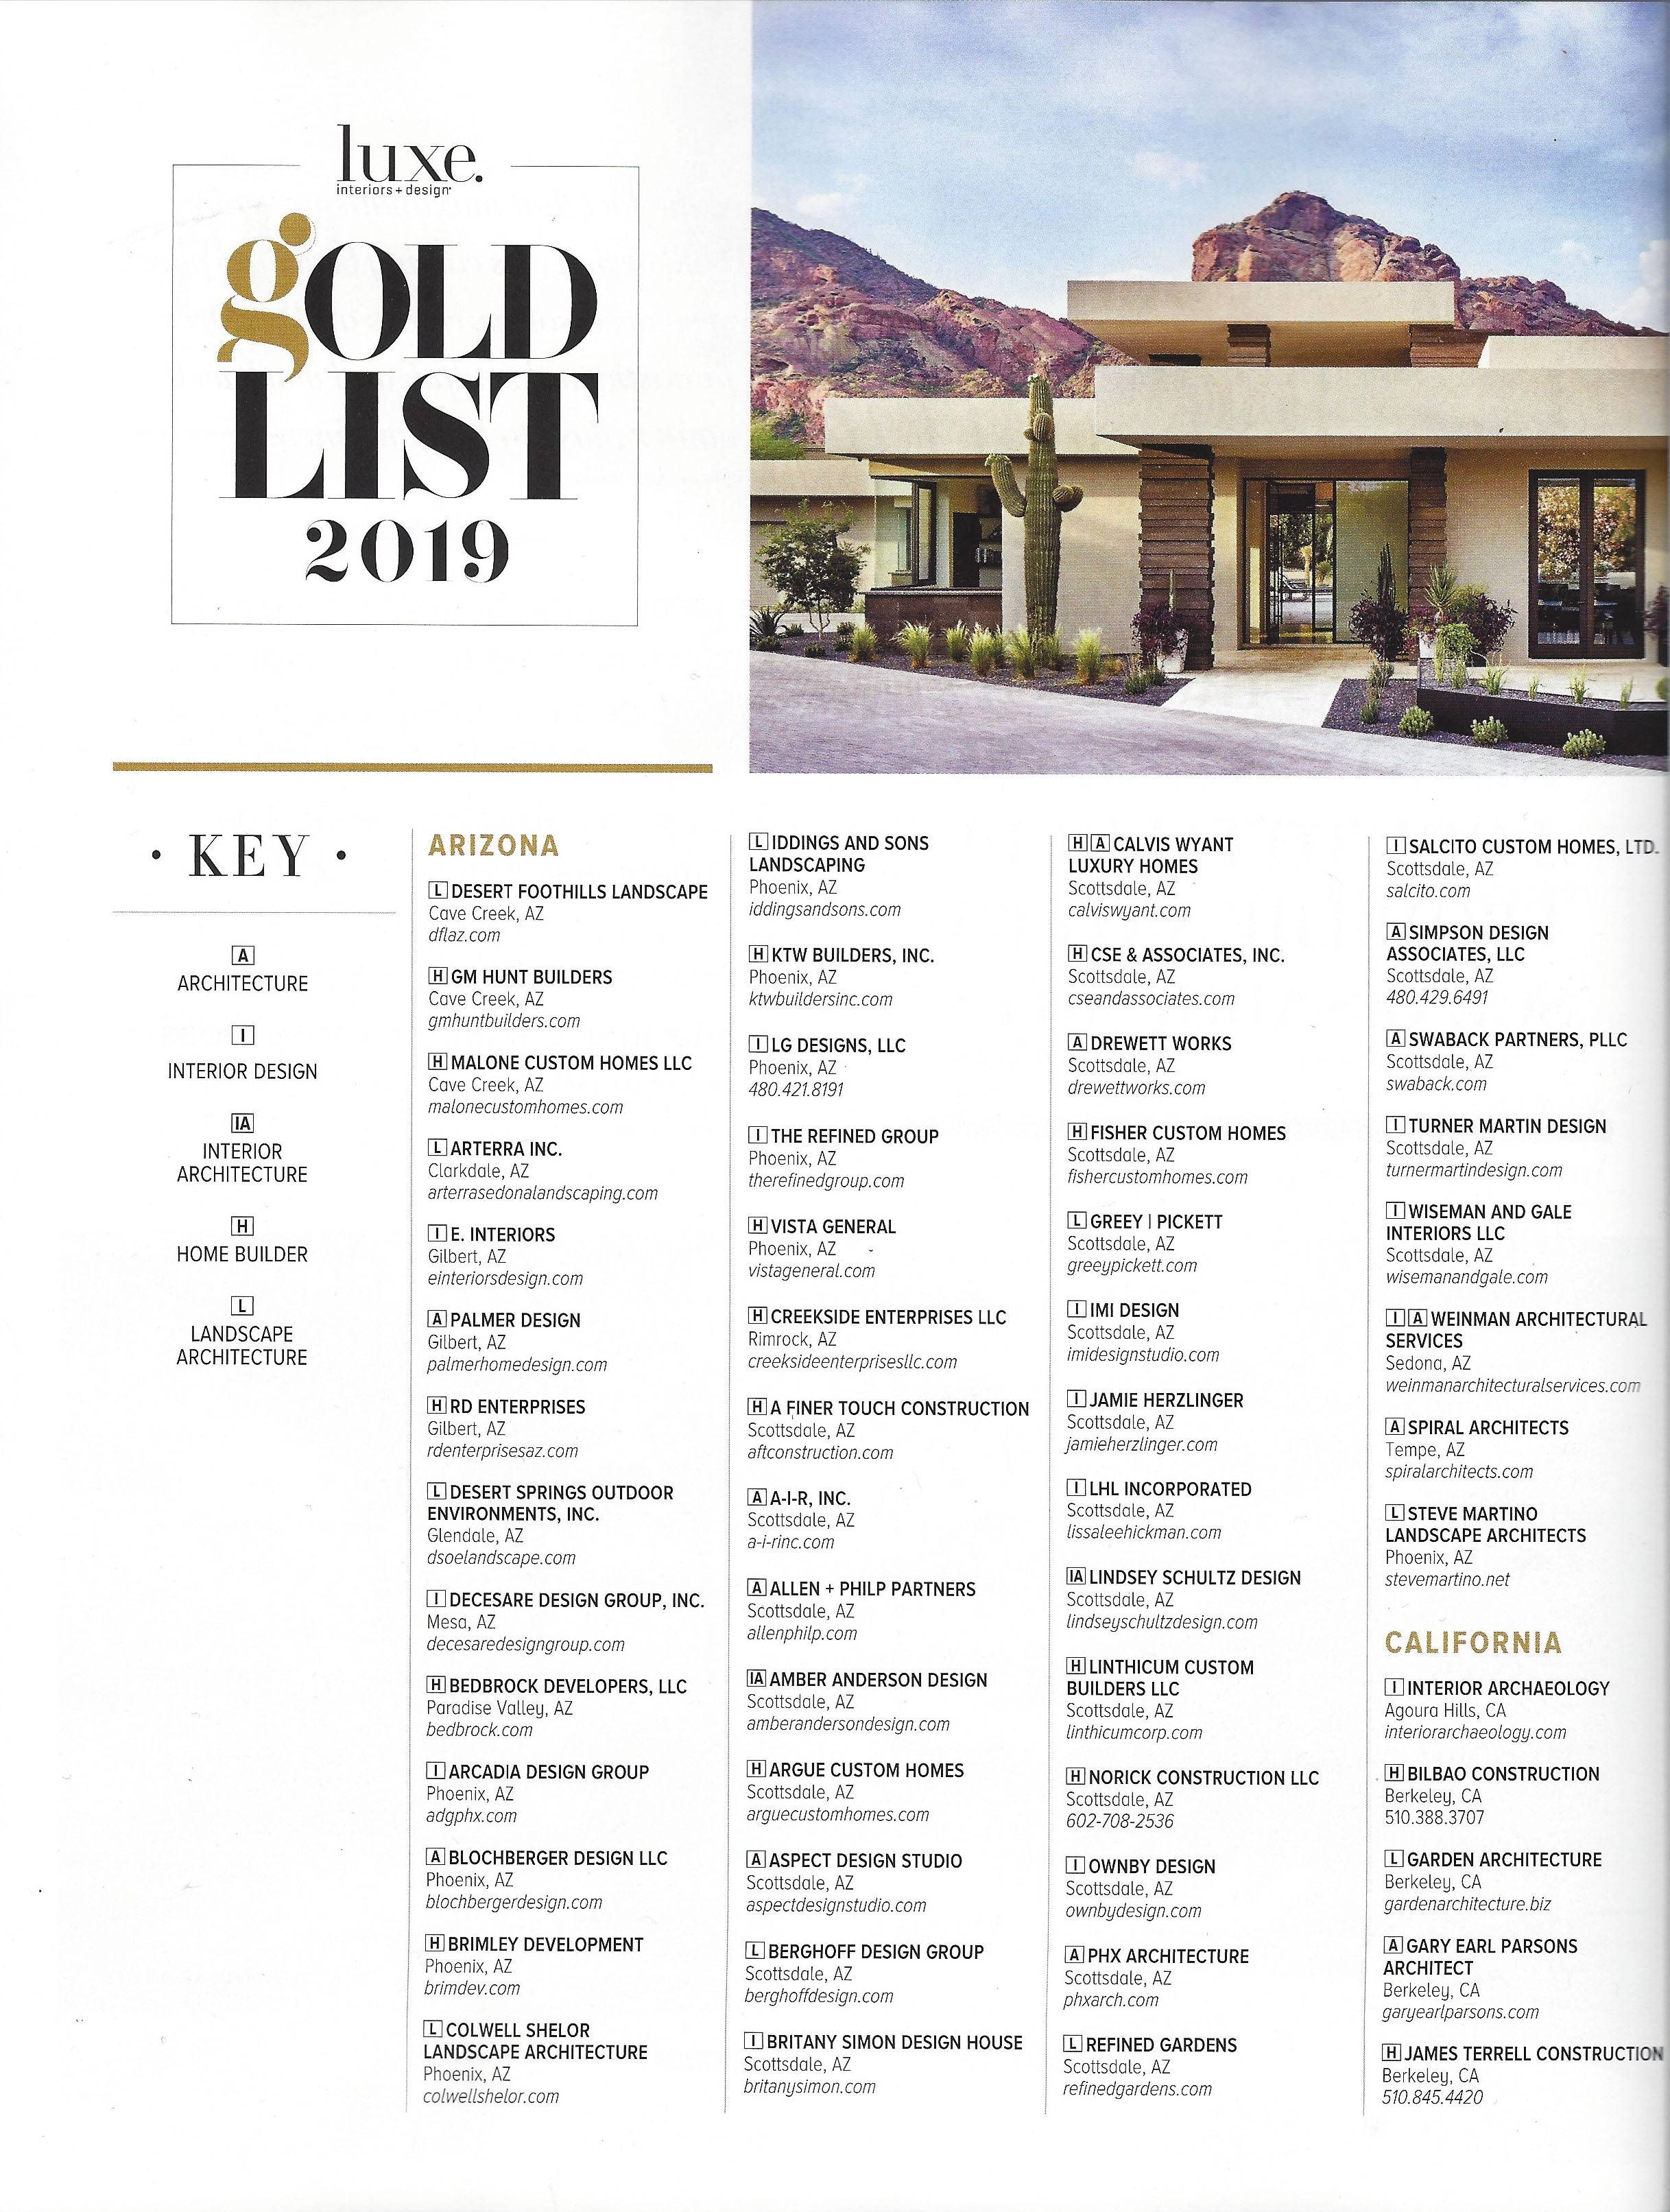 Luxe Interiors + Design Gold List 2019 Timothy Corrigan